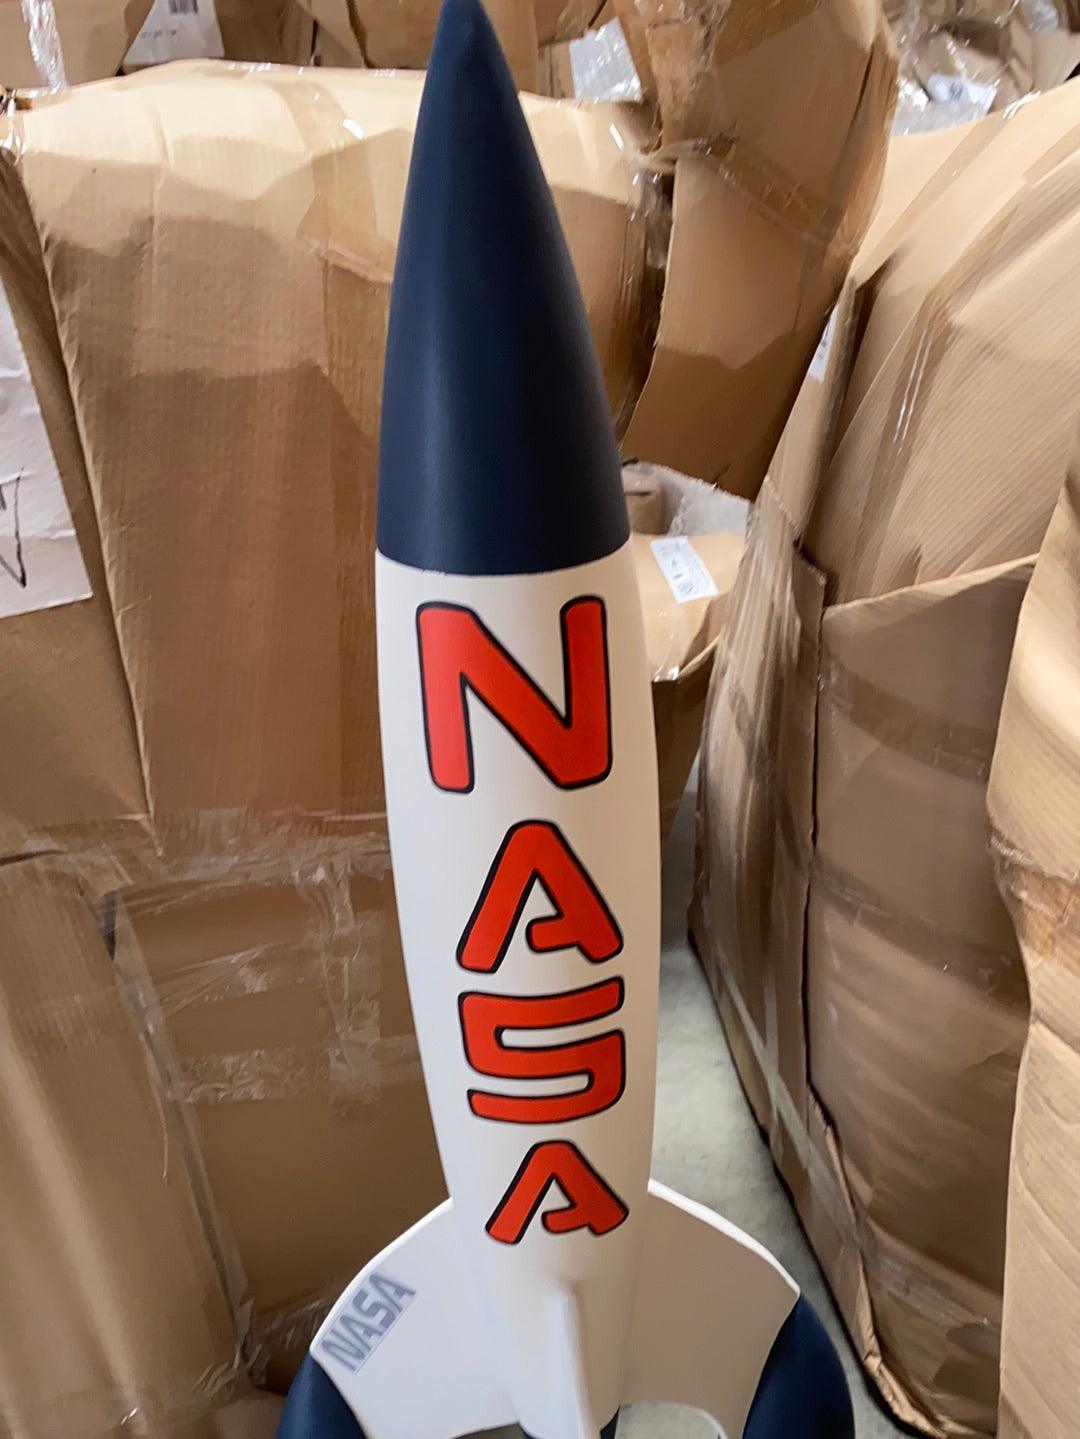 Small NASA Space Rocket Statue